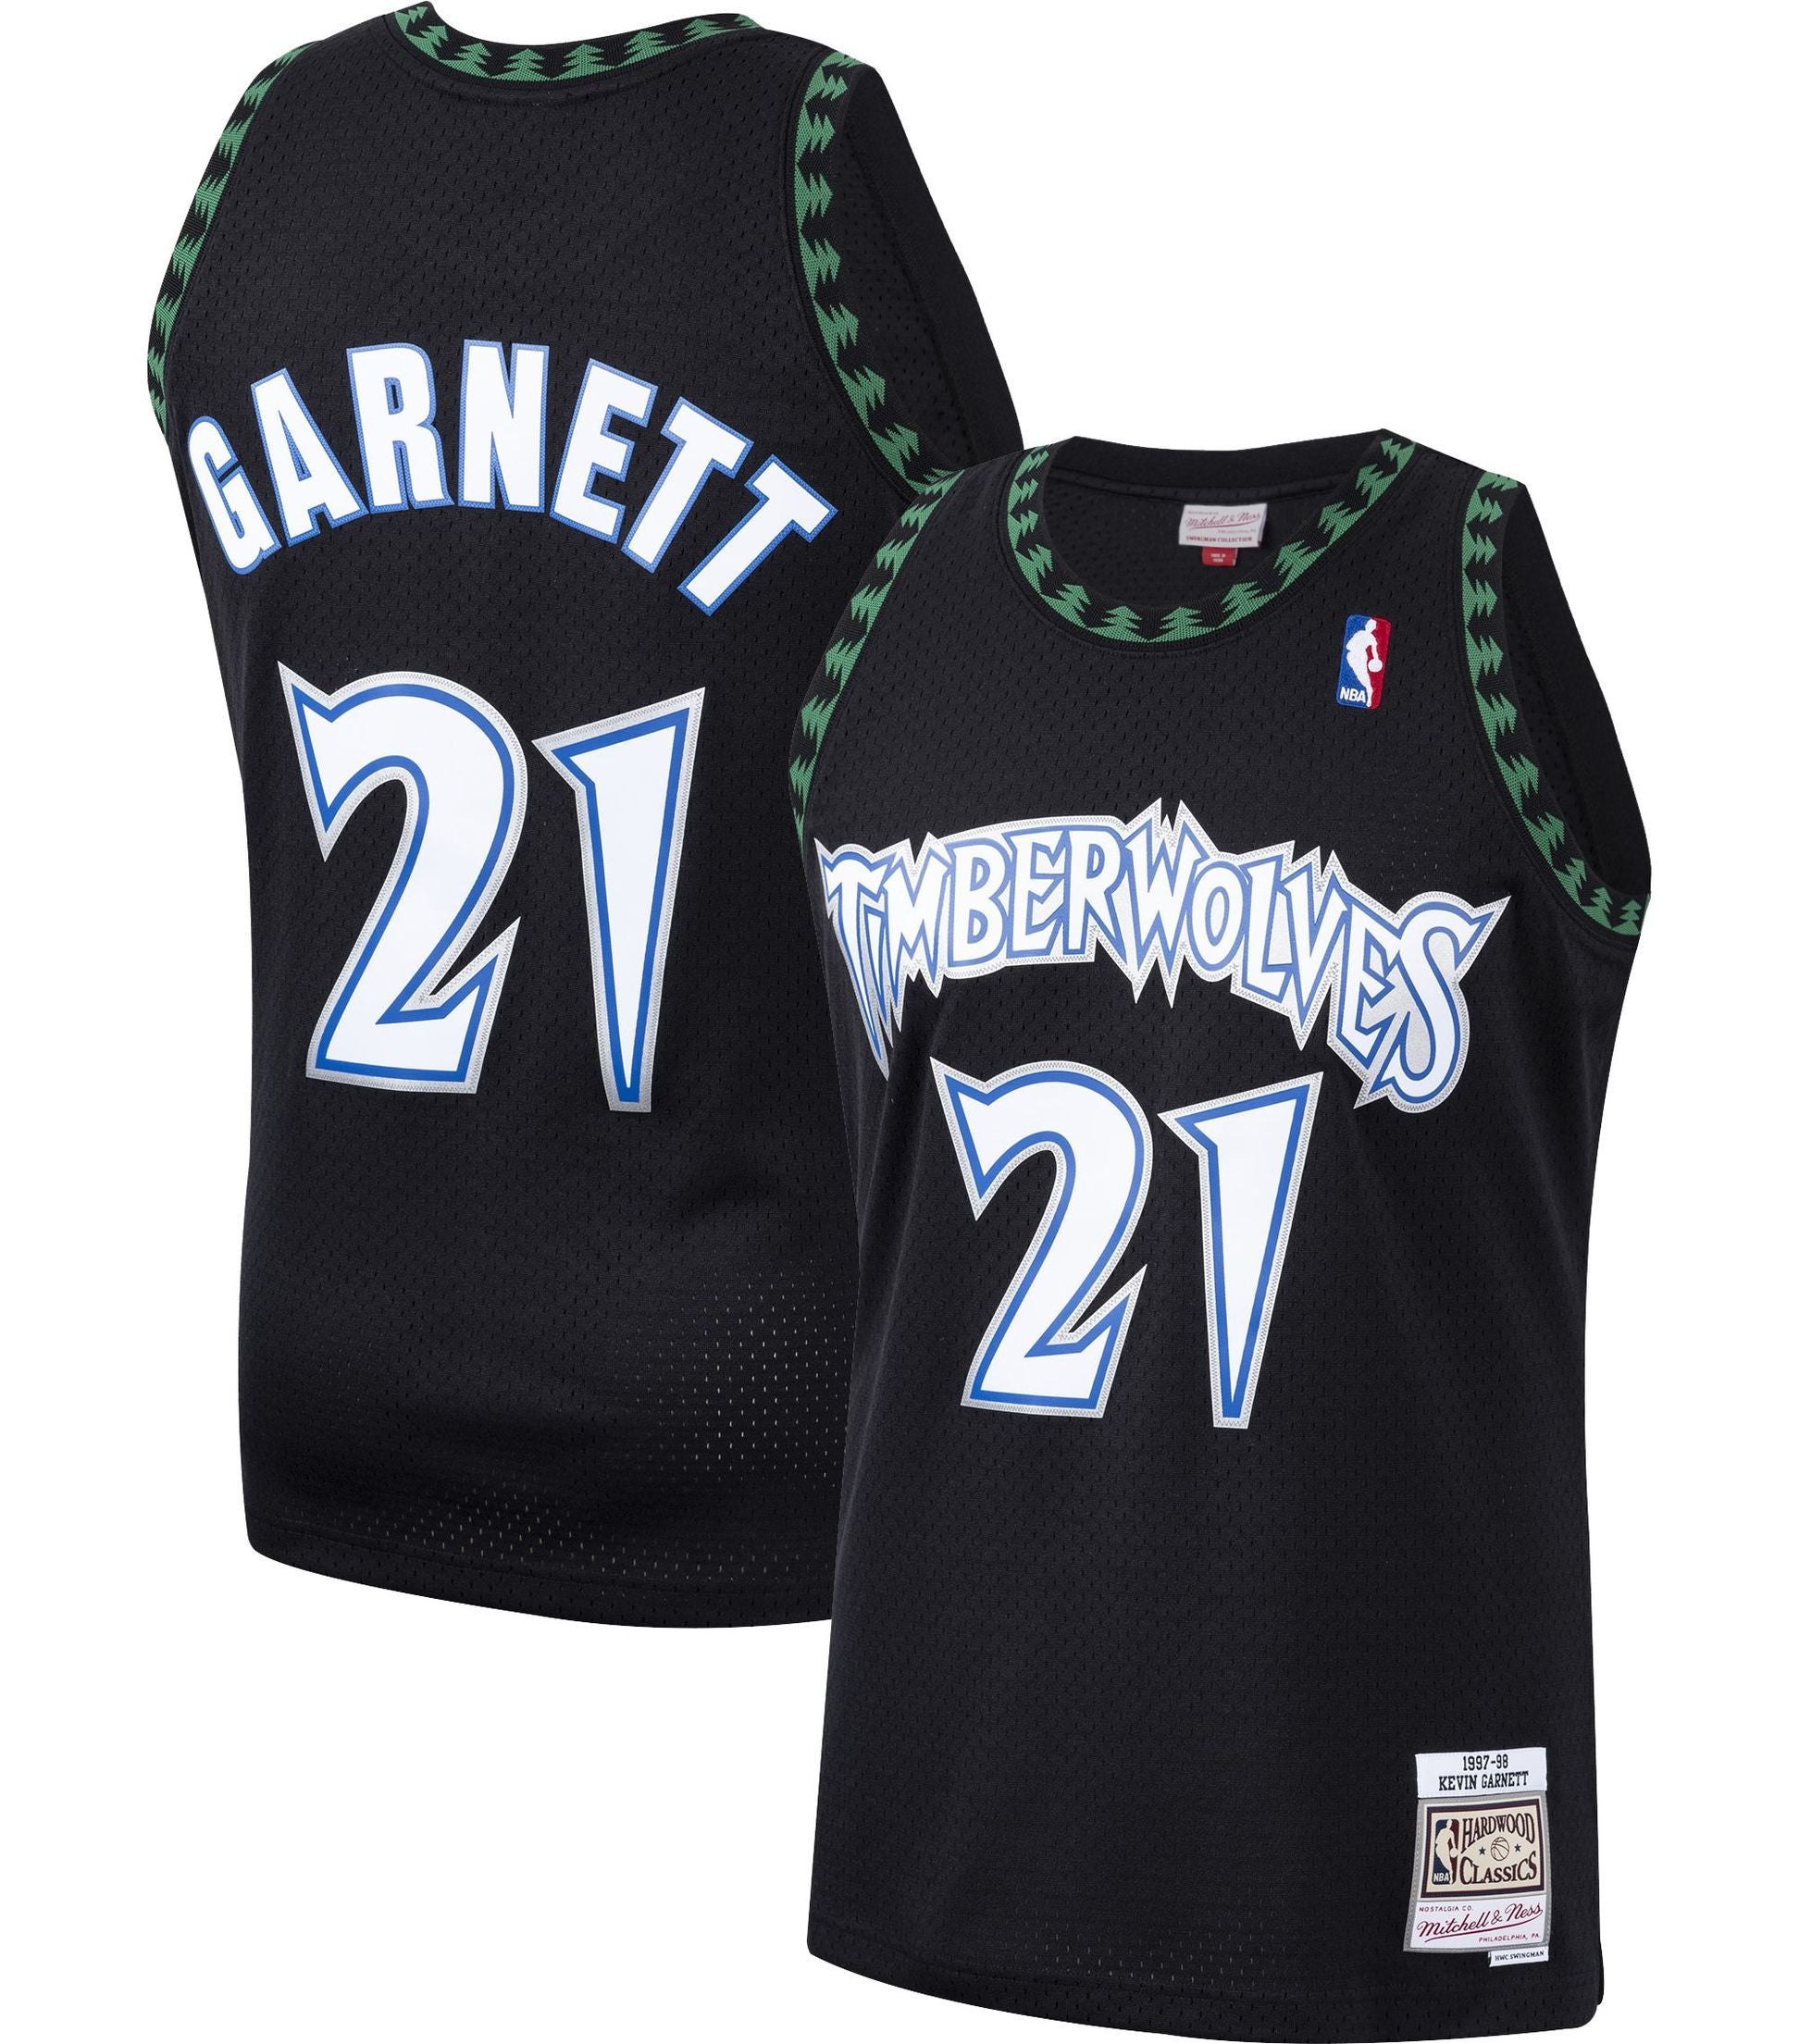 Vintage 2004 Nike NBA Kevin Garnett #21 West All Star Game Jersey Size Mens  4XL